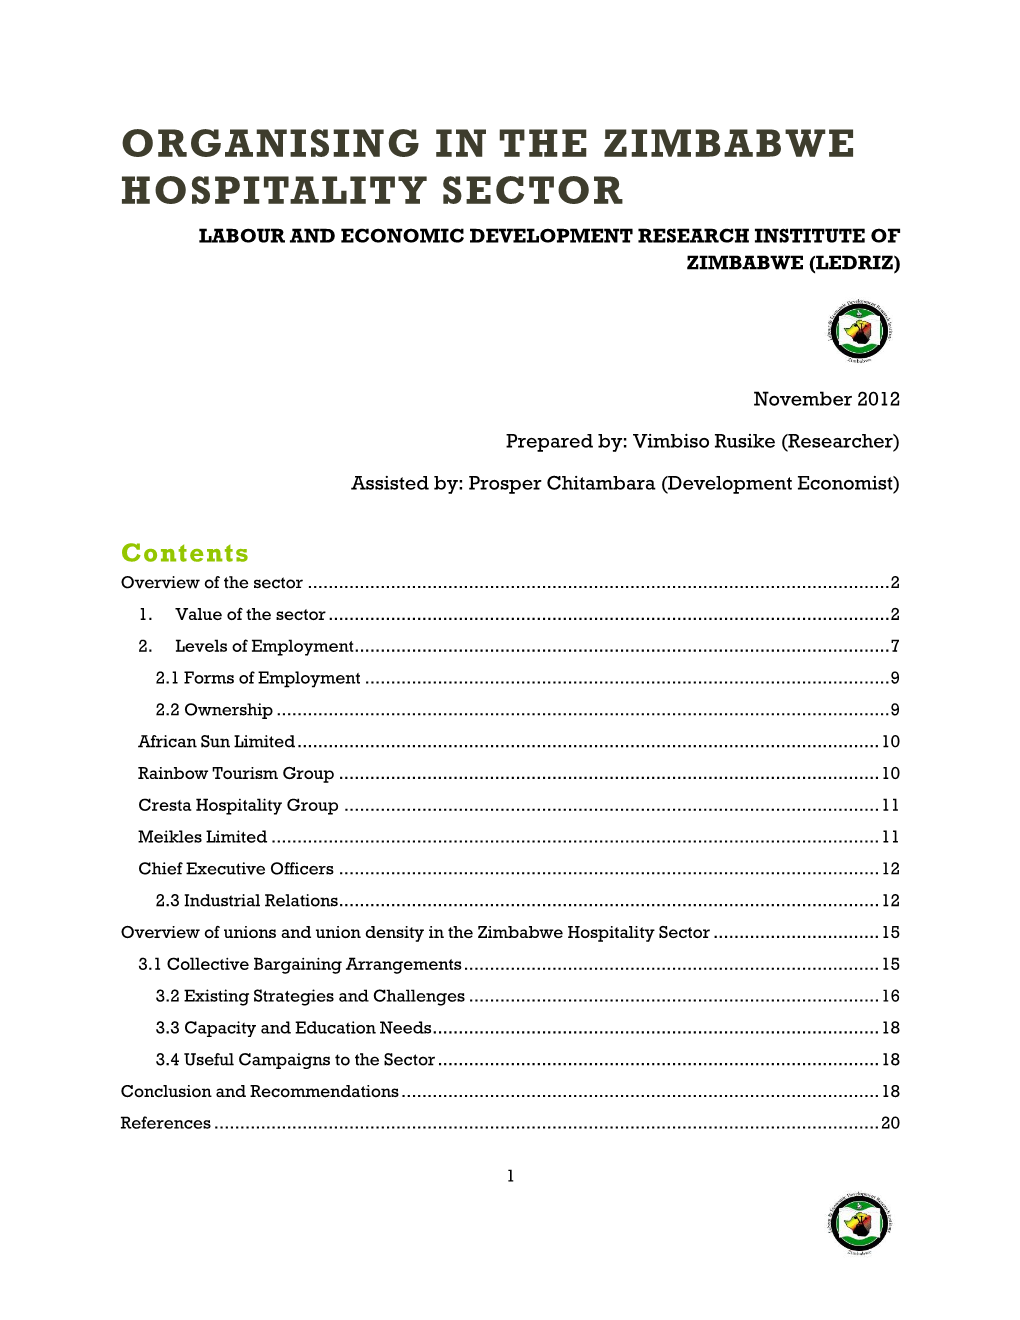 Organising in the Zimbabwe Hospitality Sector Labour and Economic Development Research Institute of Zimbabwe (Ledriz)